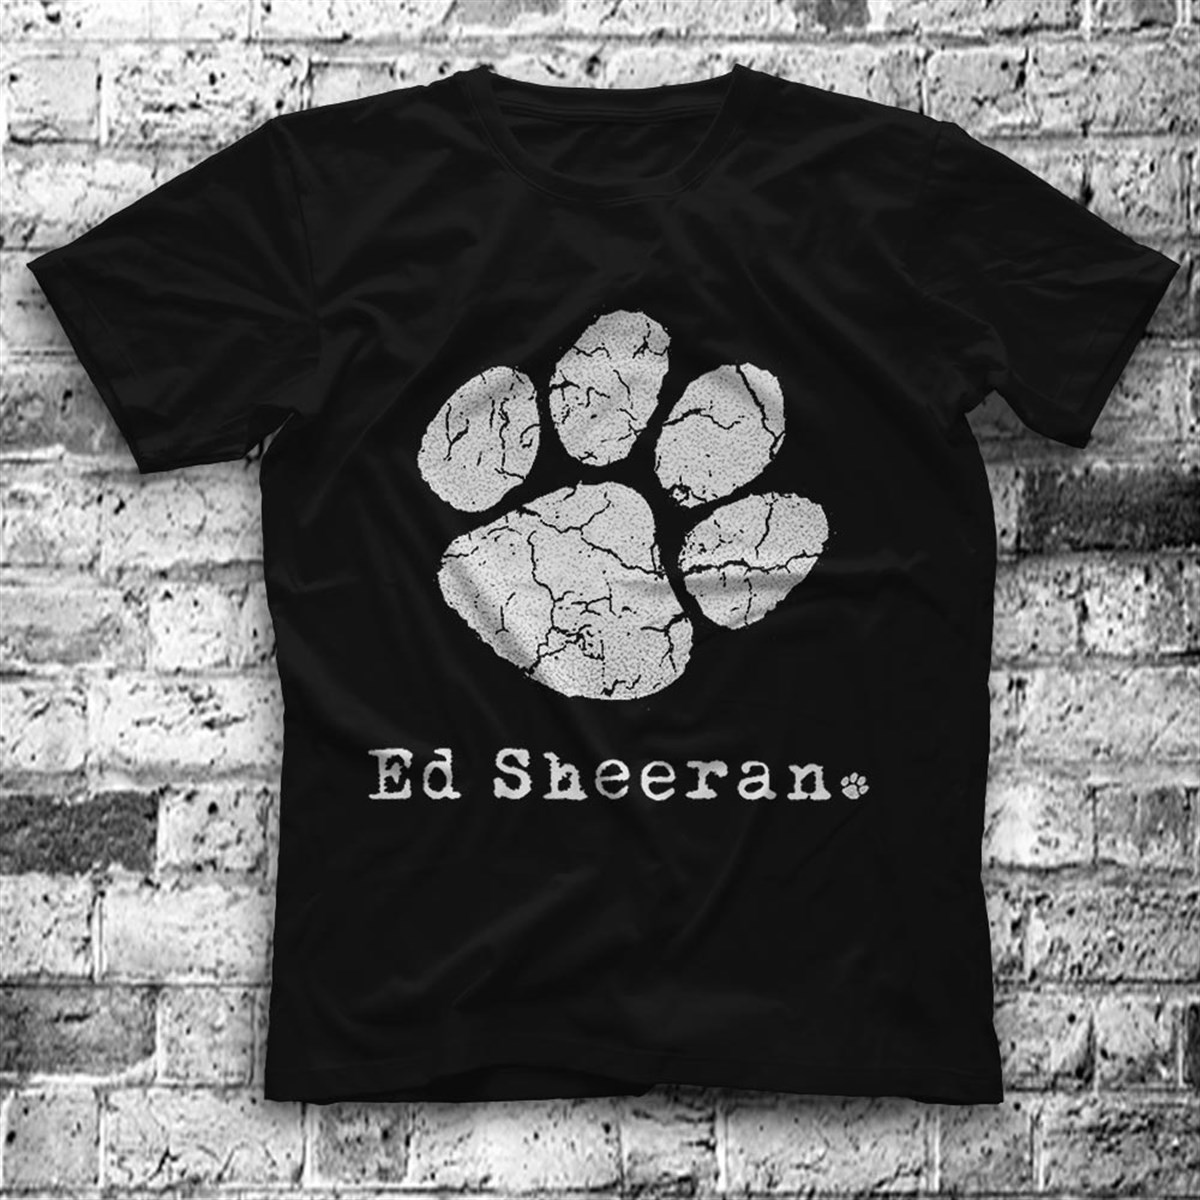 Ed Sheeran singer songwriter T shirts , Music Band Tshirts